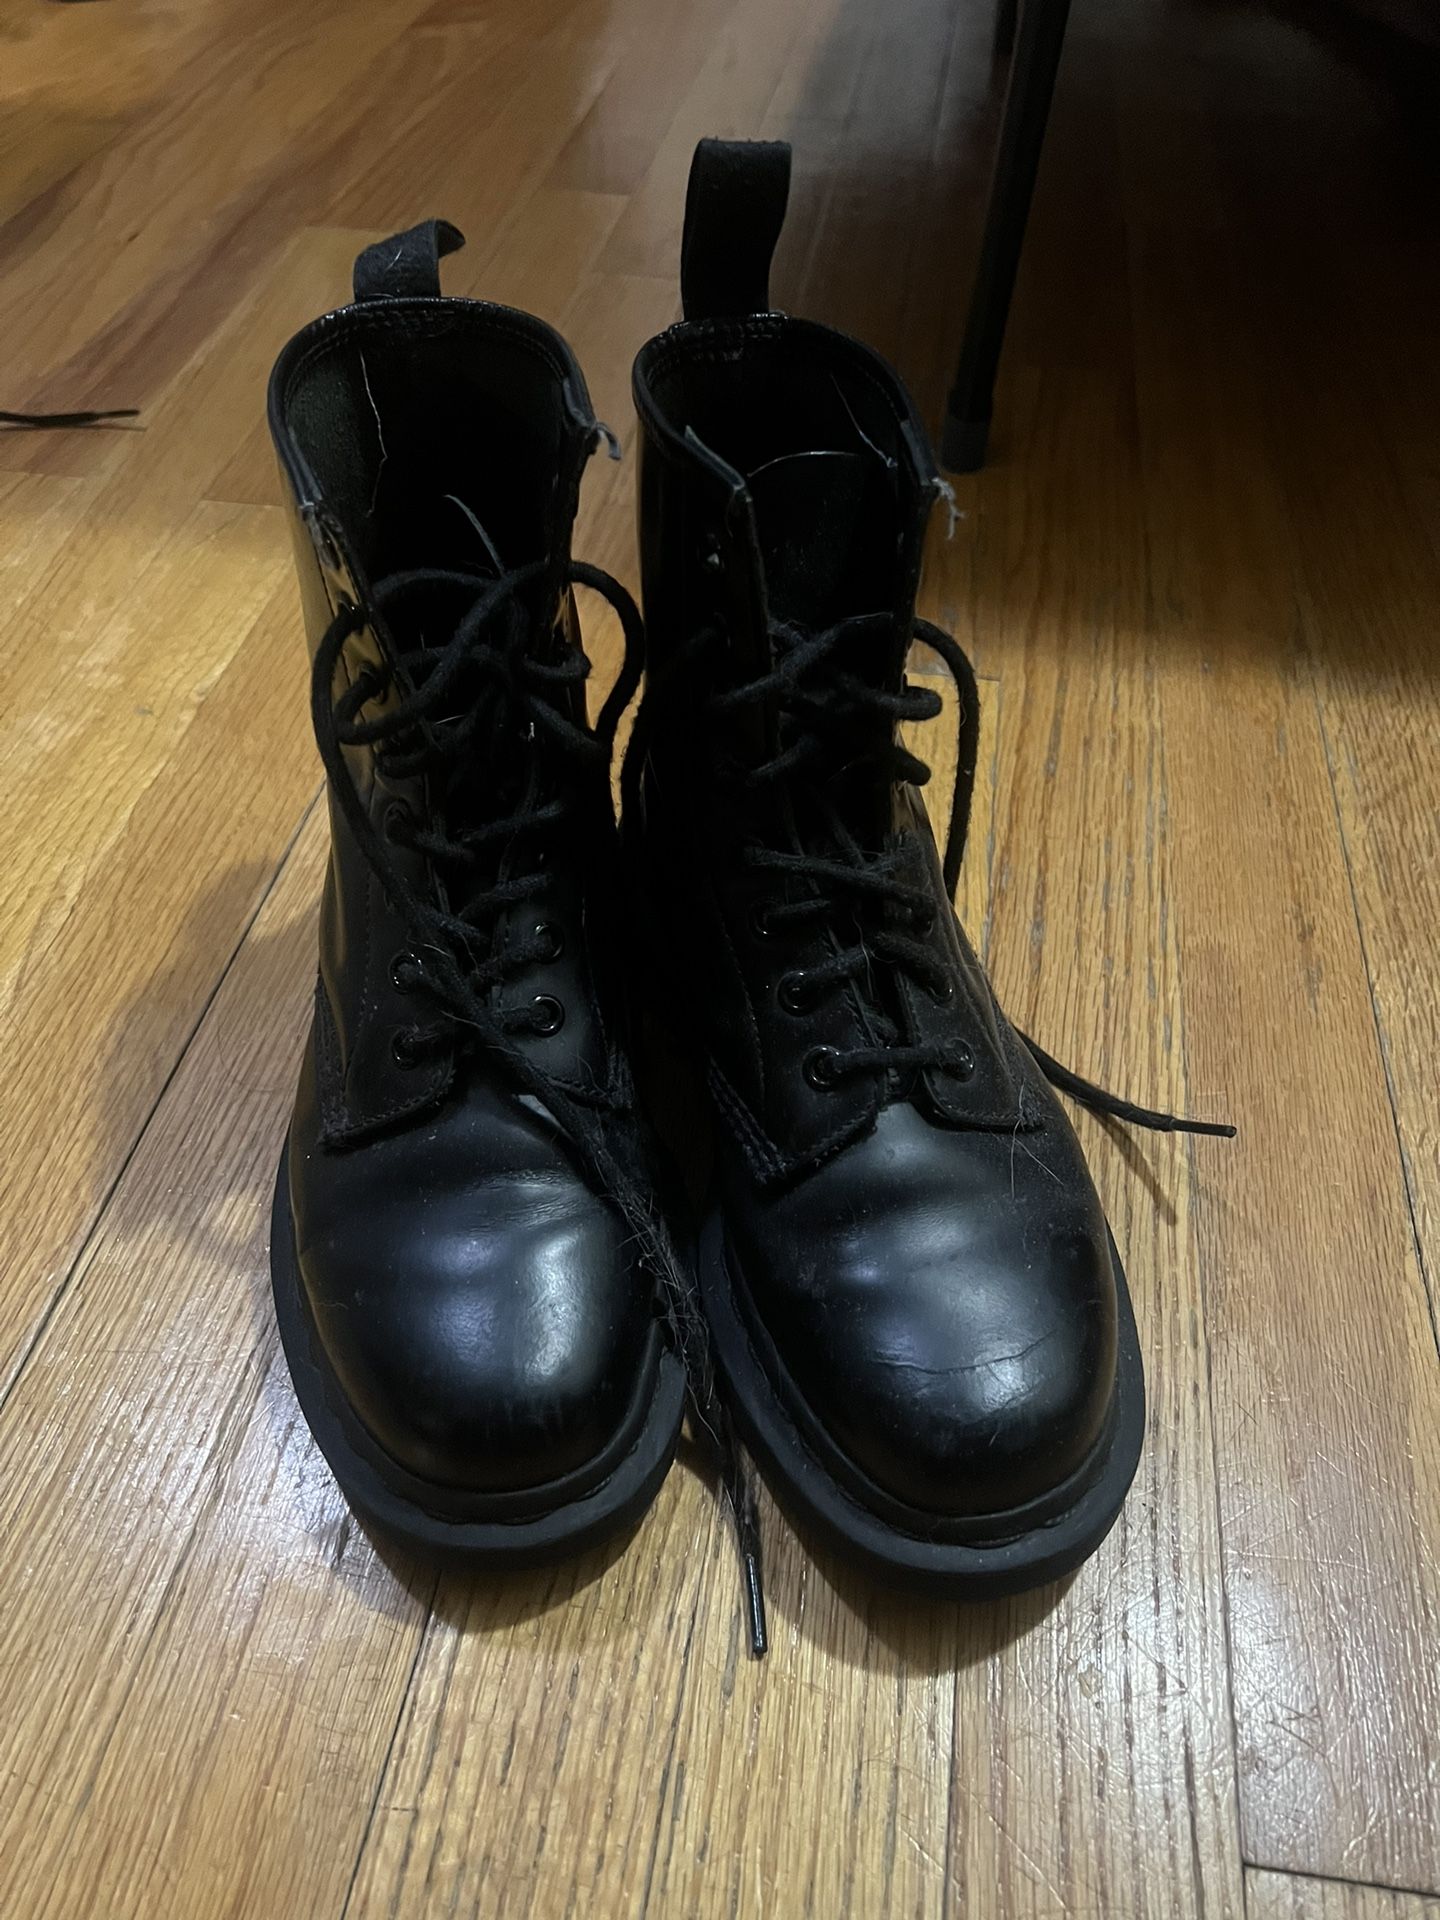 Doc Martens Black Boots Size 5W